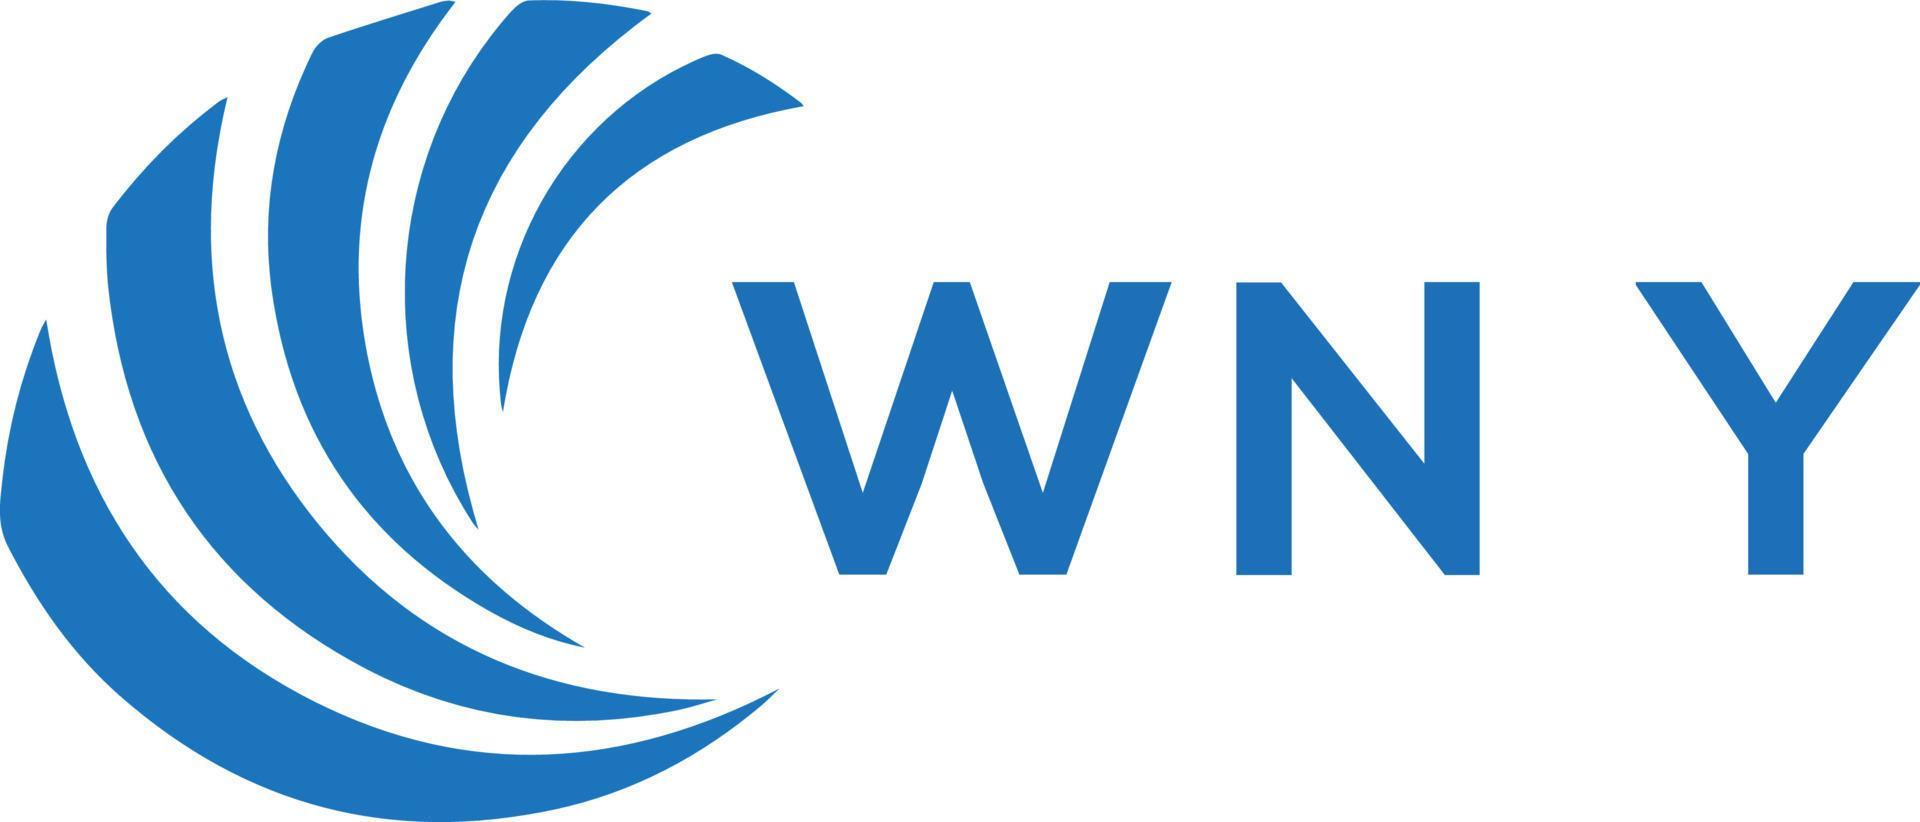 WNY letter logo design on white background. WNY creative circle letter ...